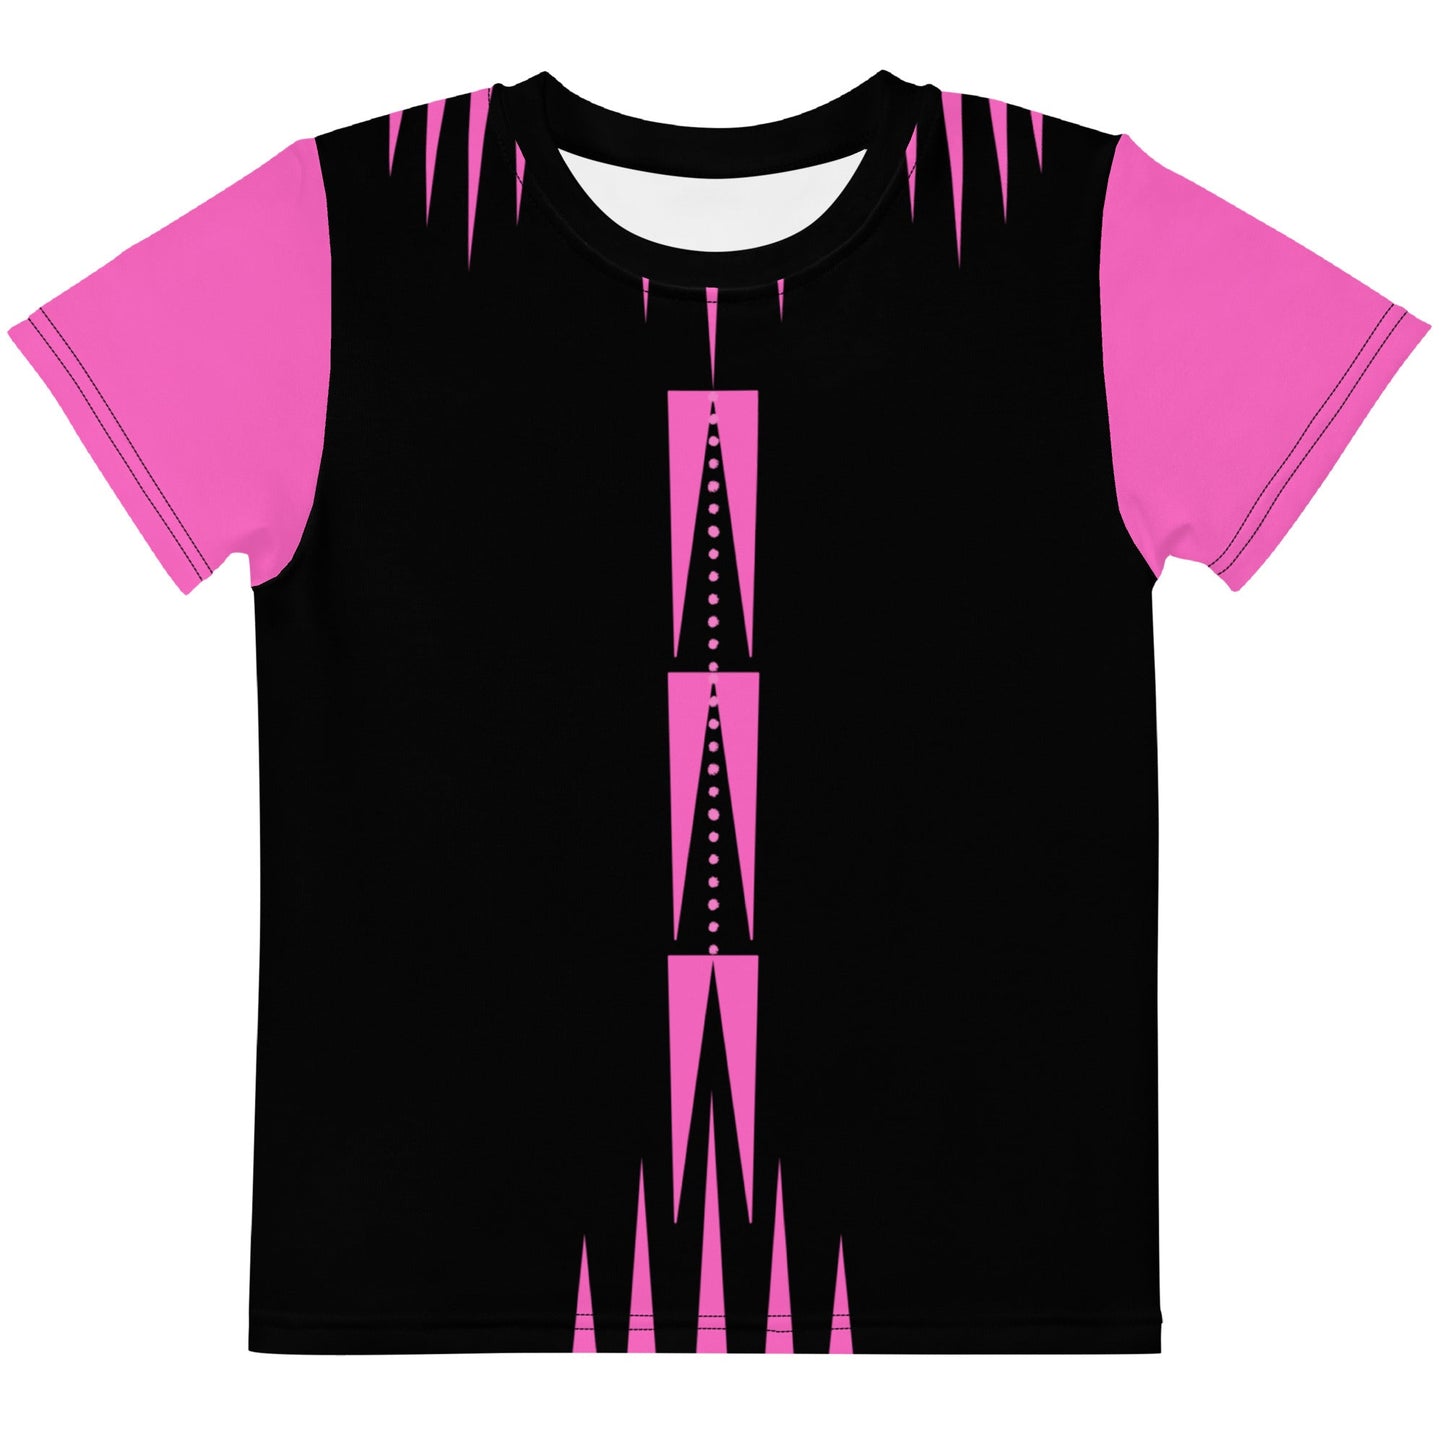 Kids crew neck t-shirt - Nikikw Designs